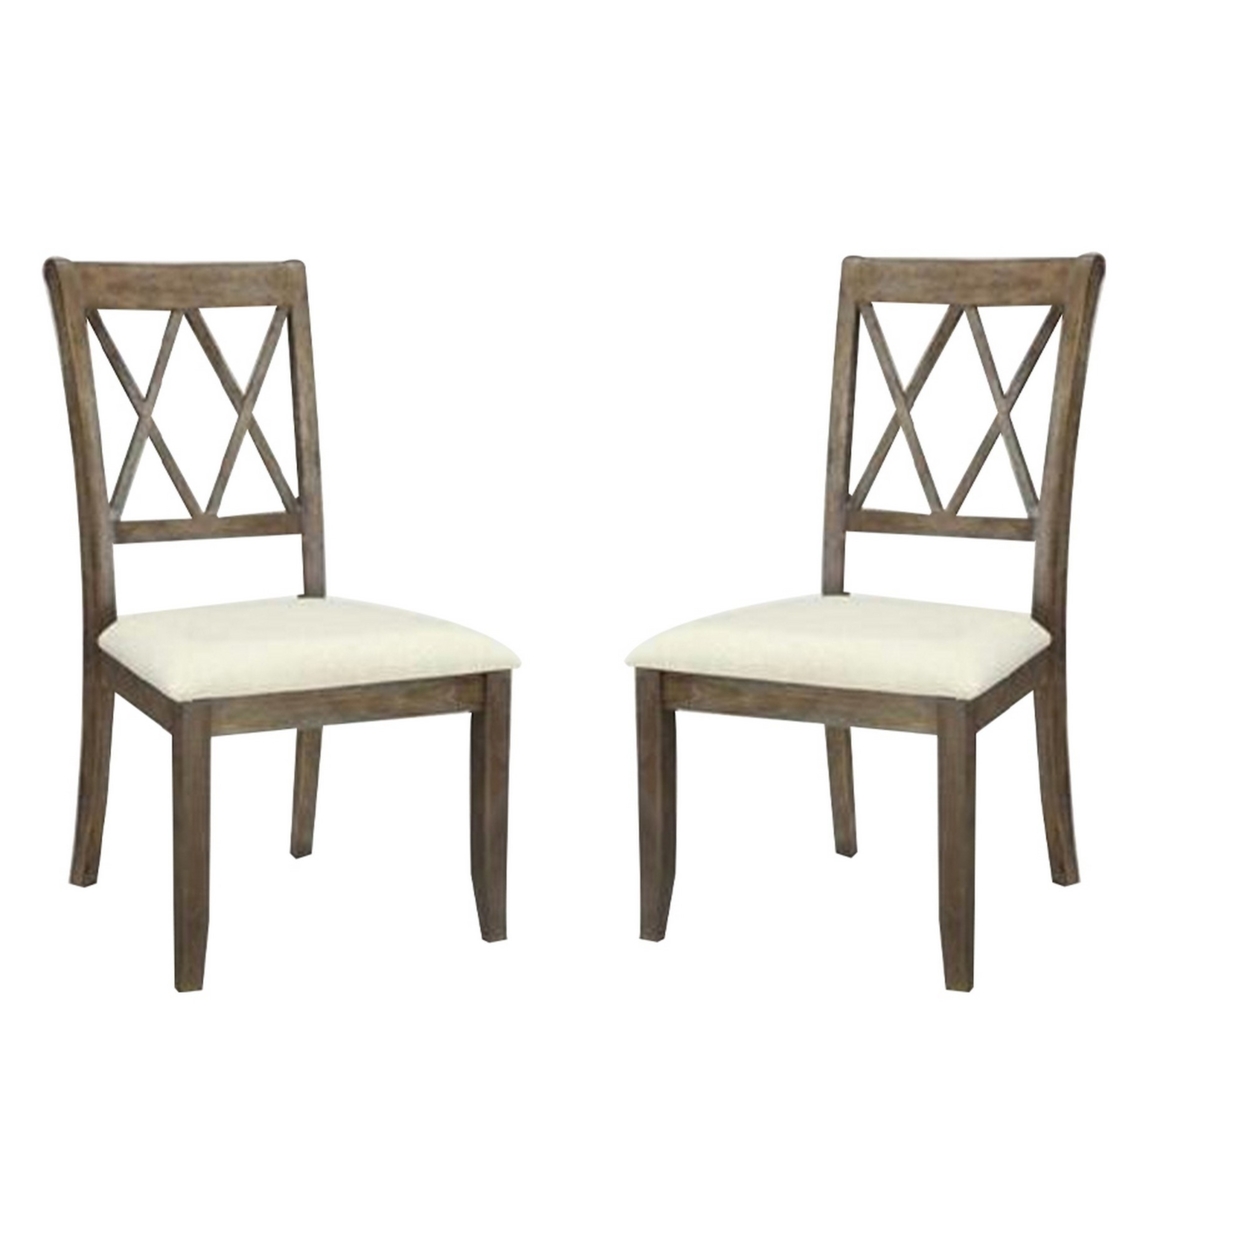 Wood Dining Chair, Double X Backrest, Set Of 2, Beige, Brown- Saltoro Sherpi